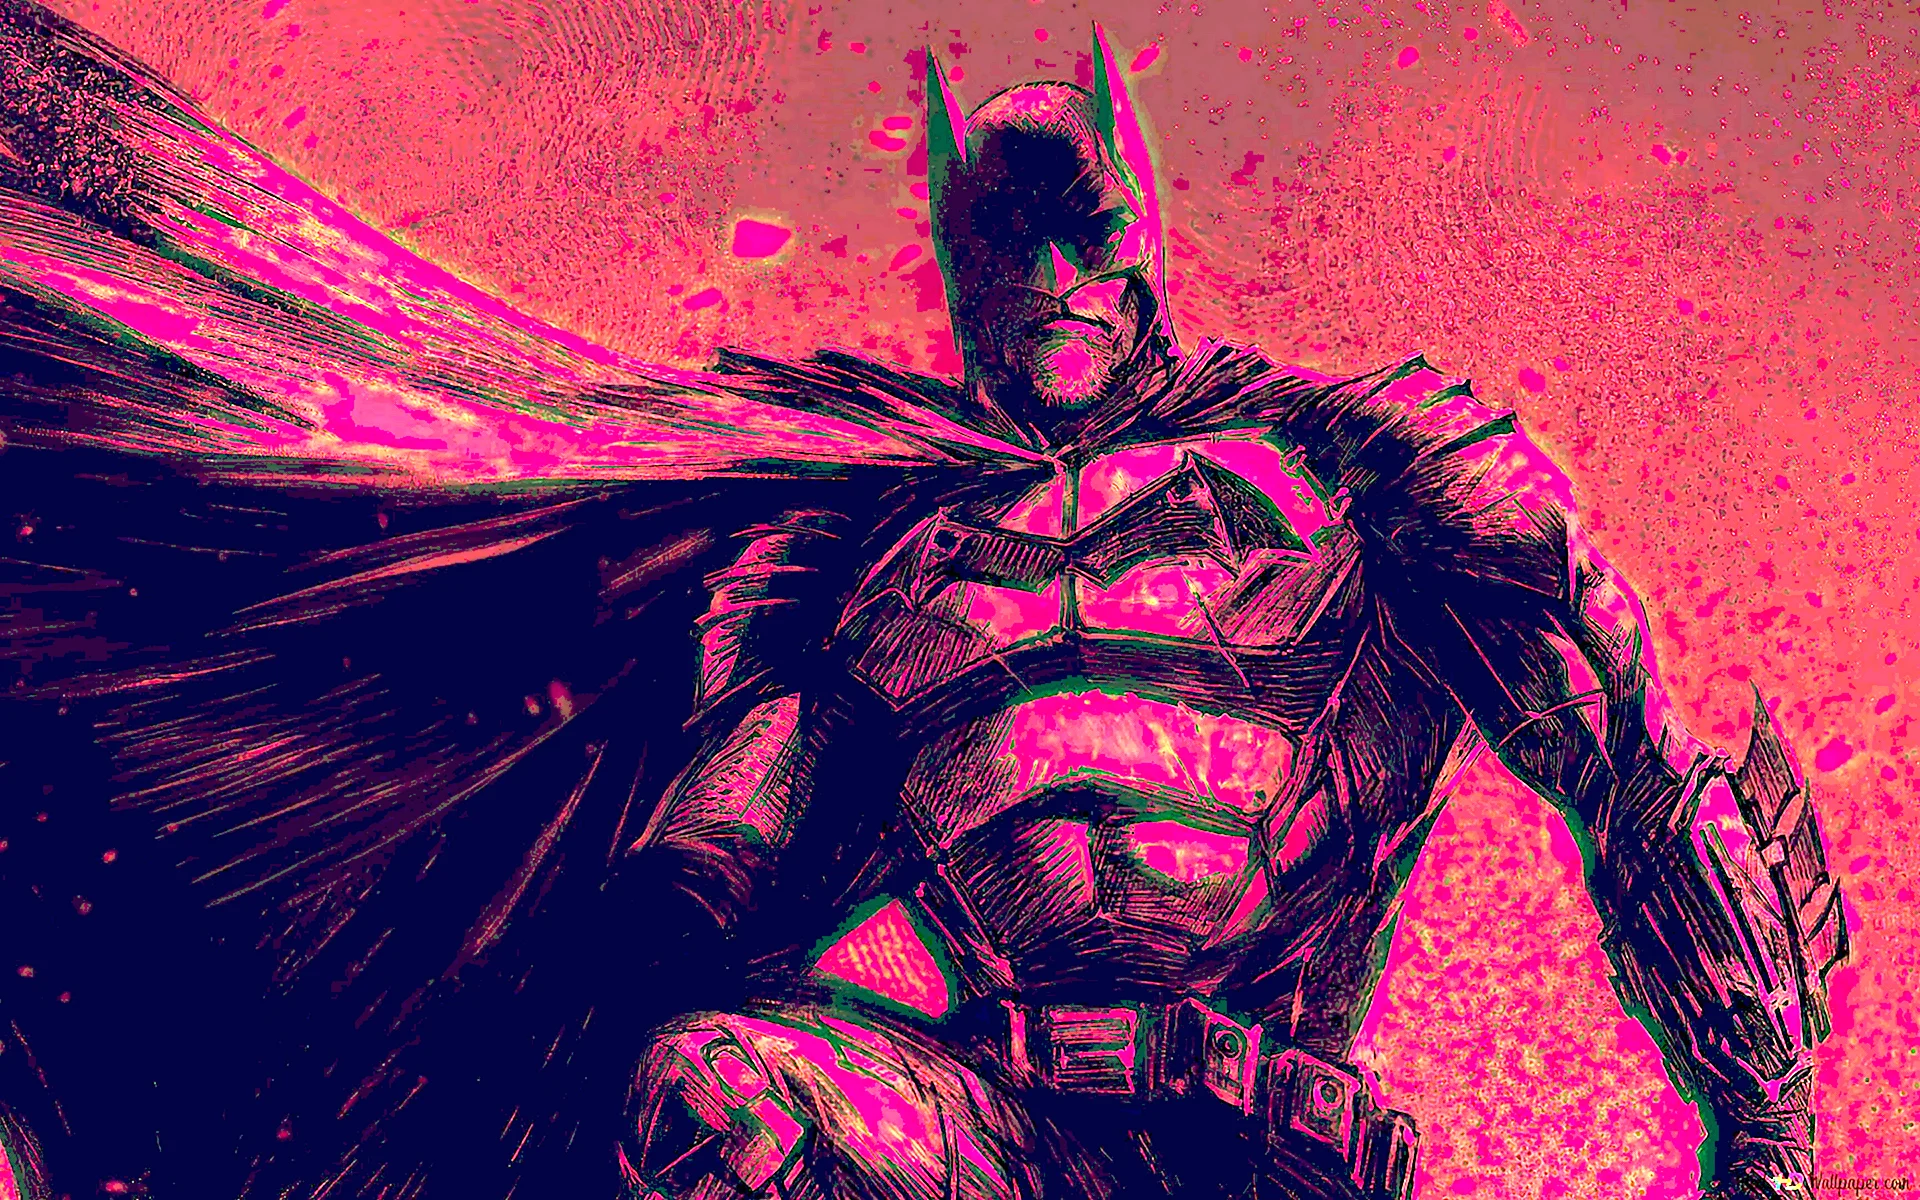 Batman 2021